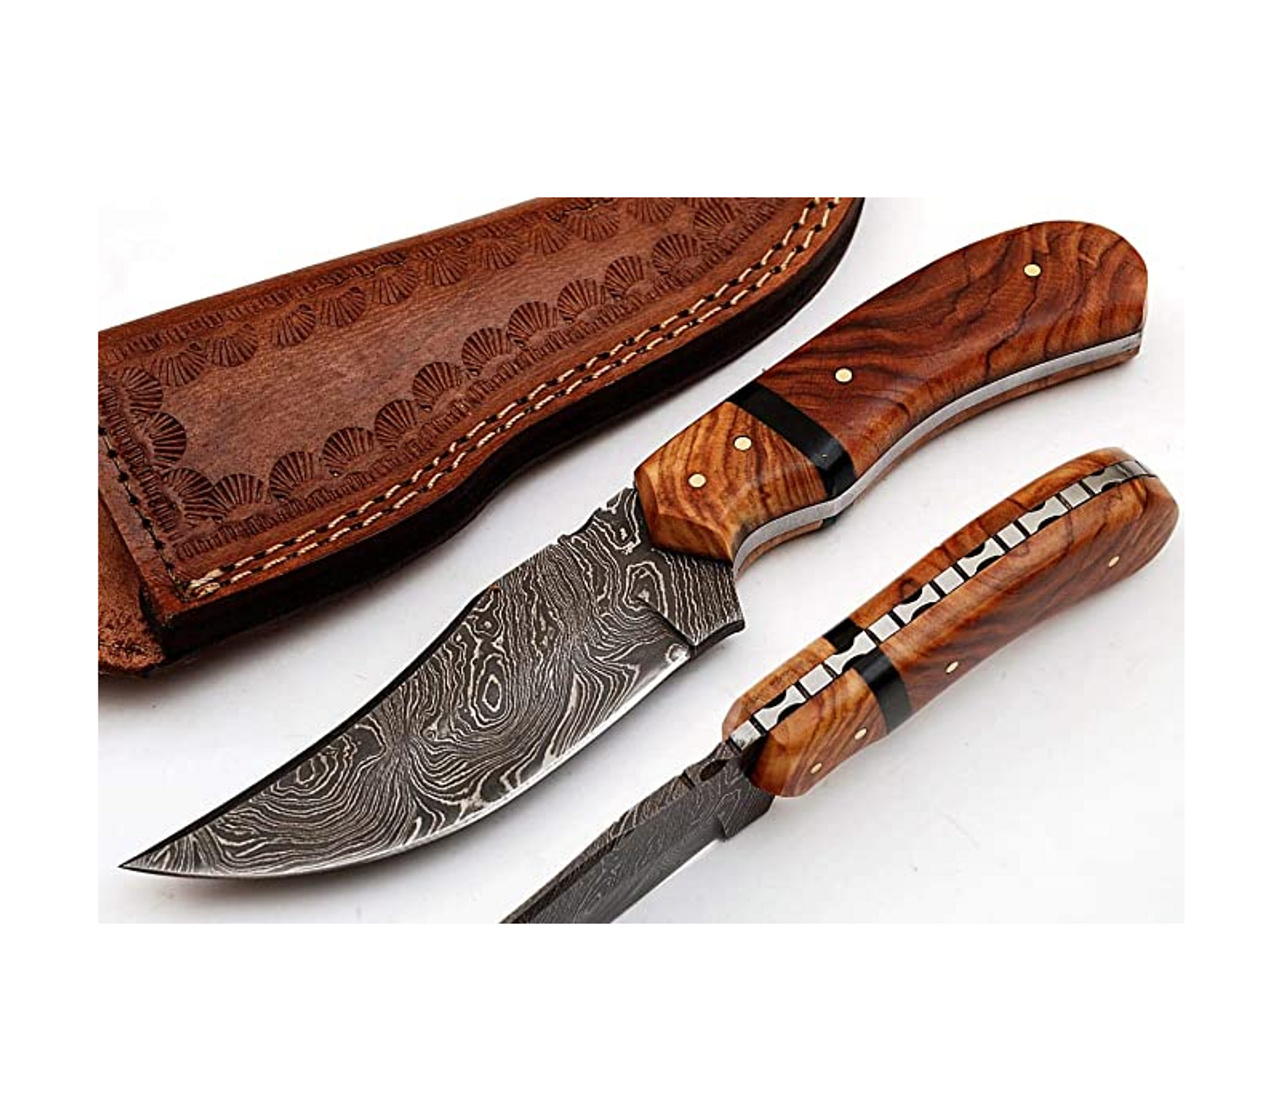 Handmade Damascus Steel Hunting Knife with Leather Sheath